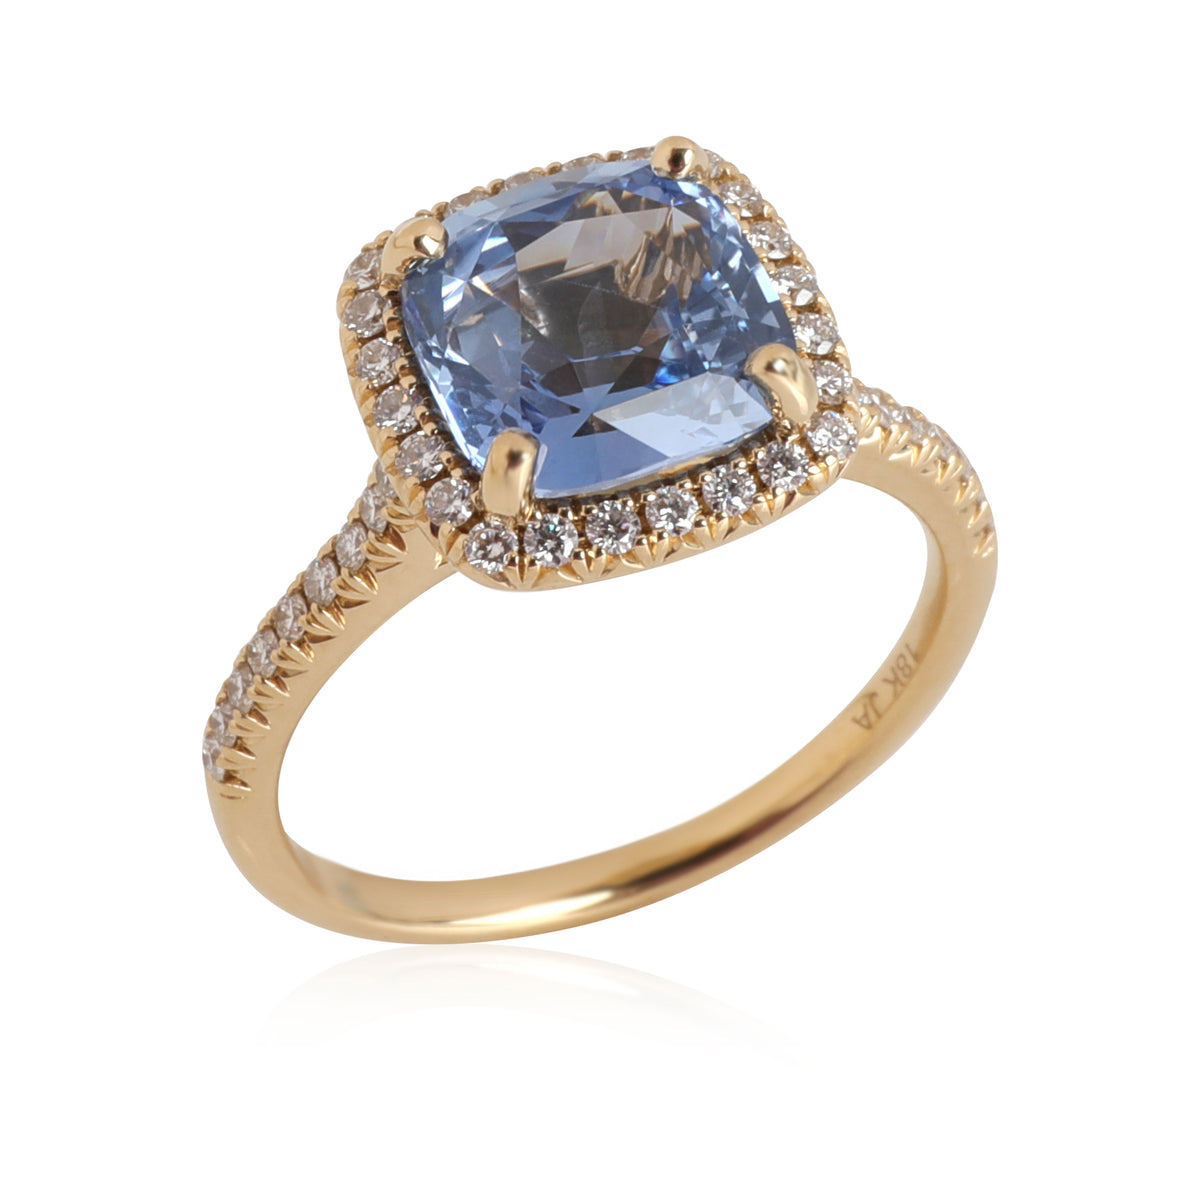 James Allen Blue Sapphire Diamond Engagement Ring in 18K Yellow Gold 0.31 CTW